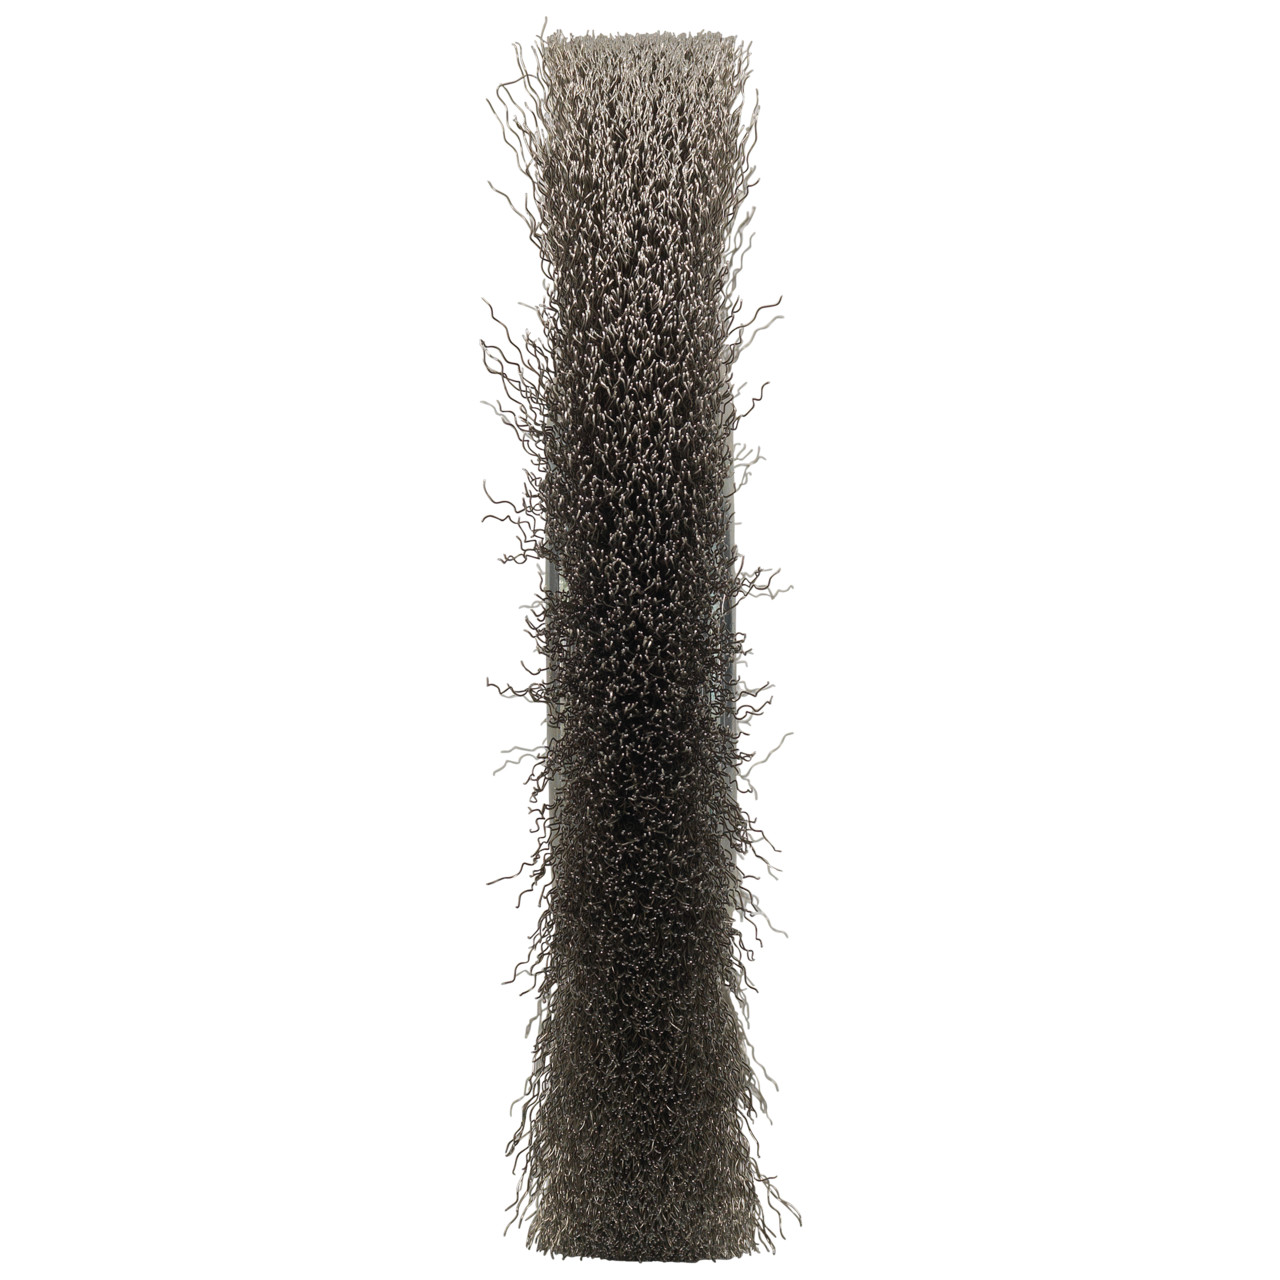 Spazzole rotonde Tyrolit DxLxH 200x26x40x32 Per acciaio inox, forma: 1RDW - (spazzole rotonde), Art. 896119